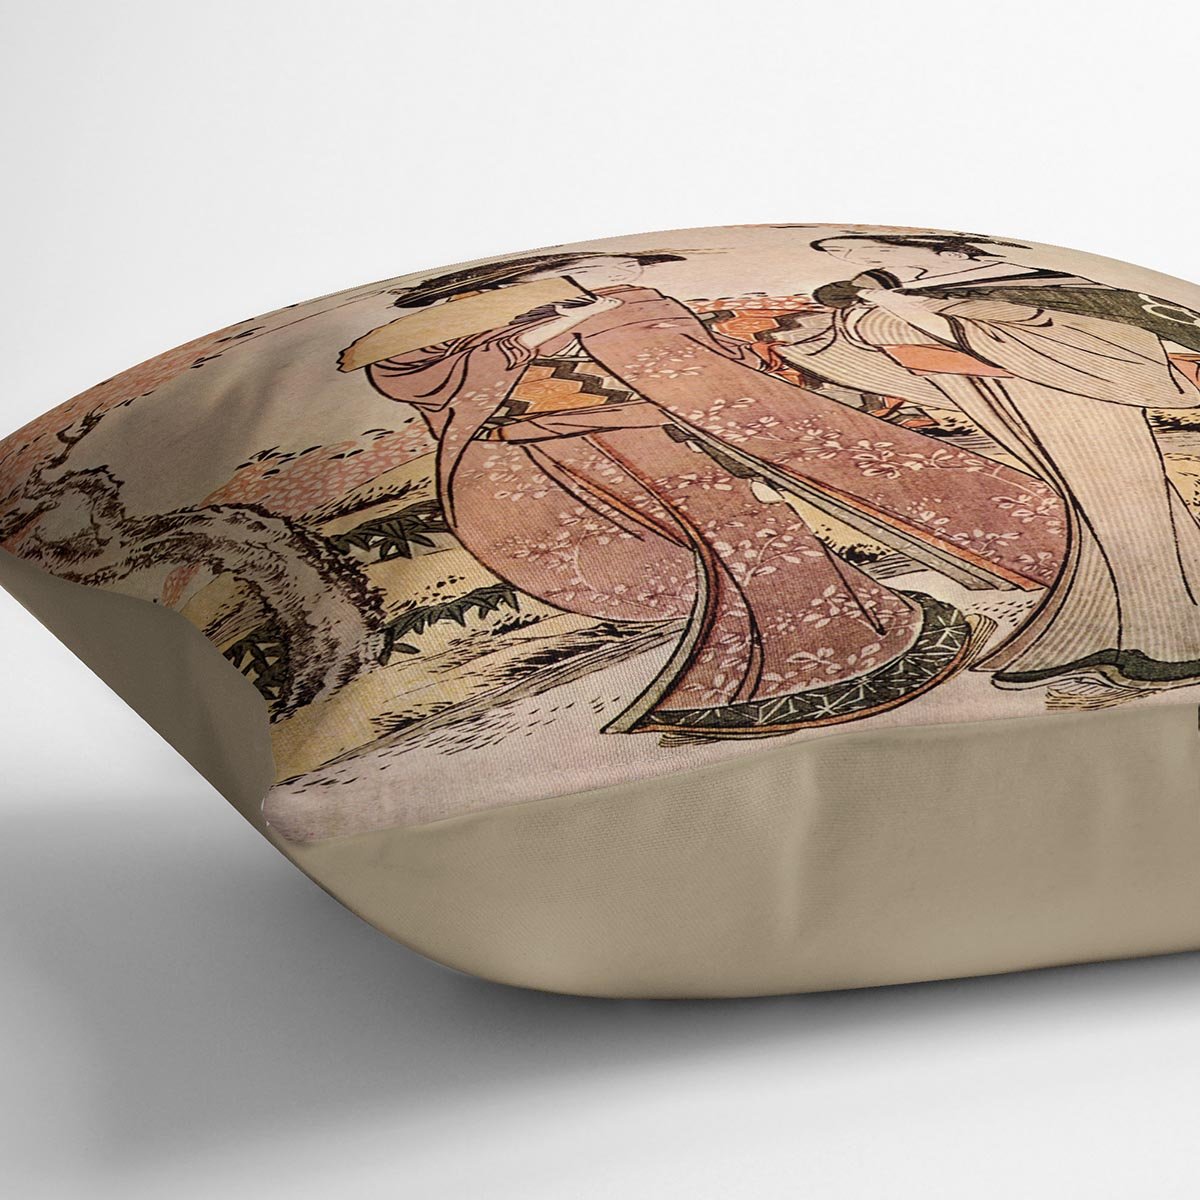 Two women by Hokusai Throw Pillow